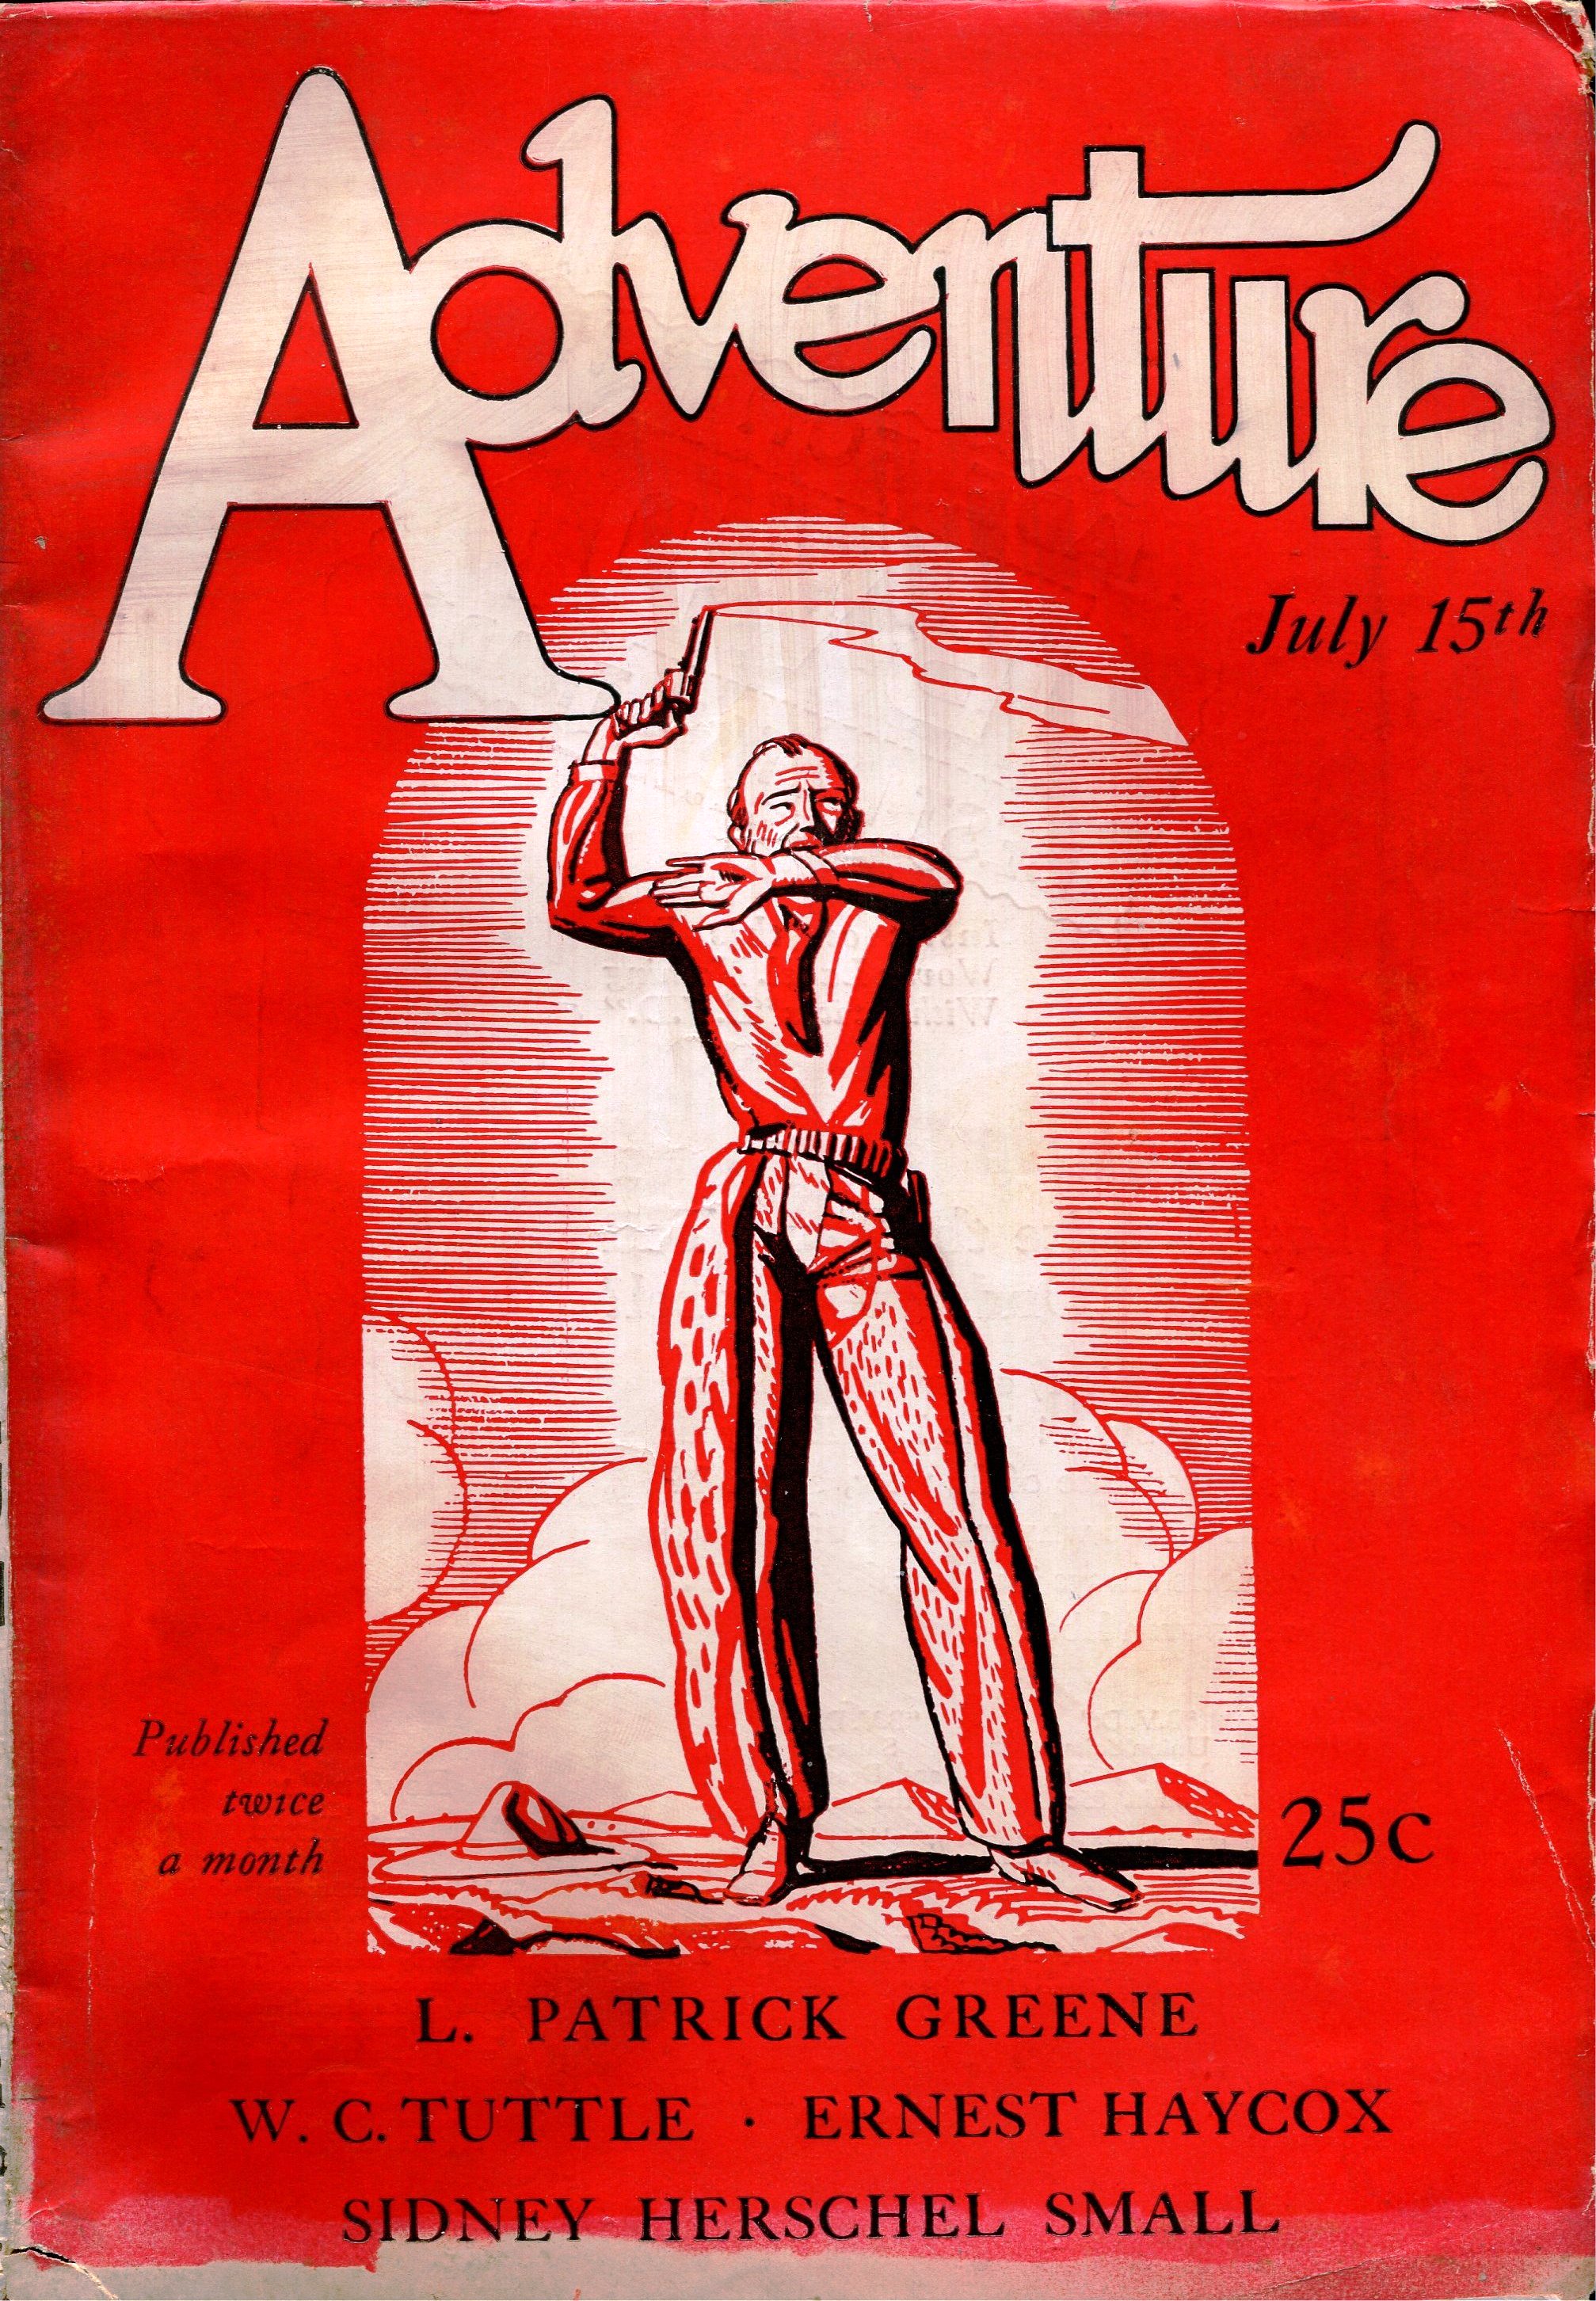 Image - Adventure, July 15, 1927